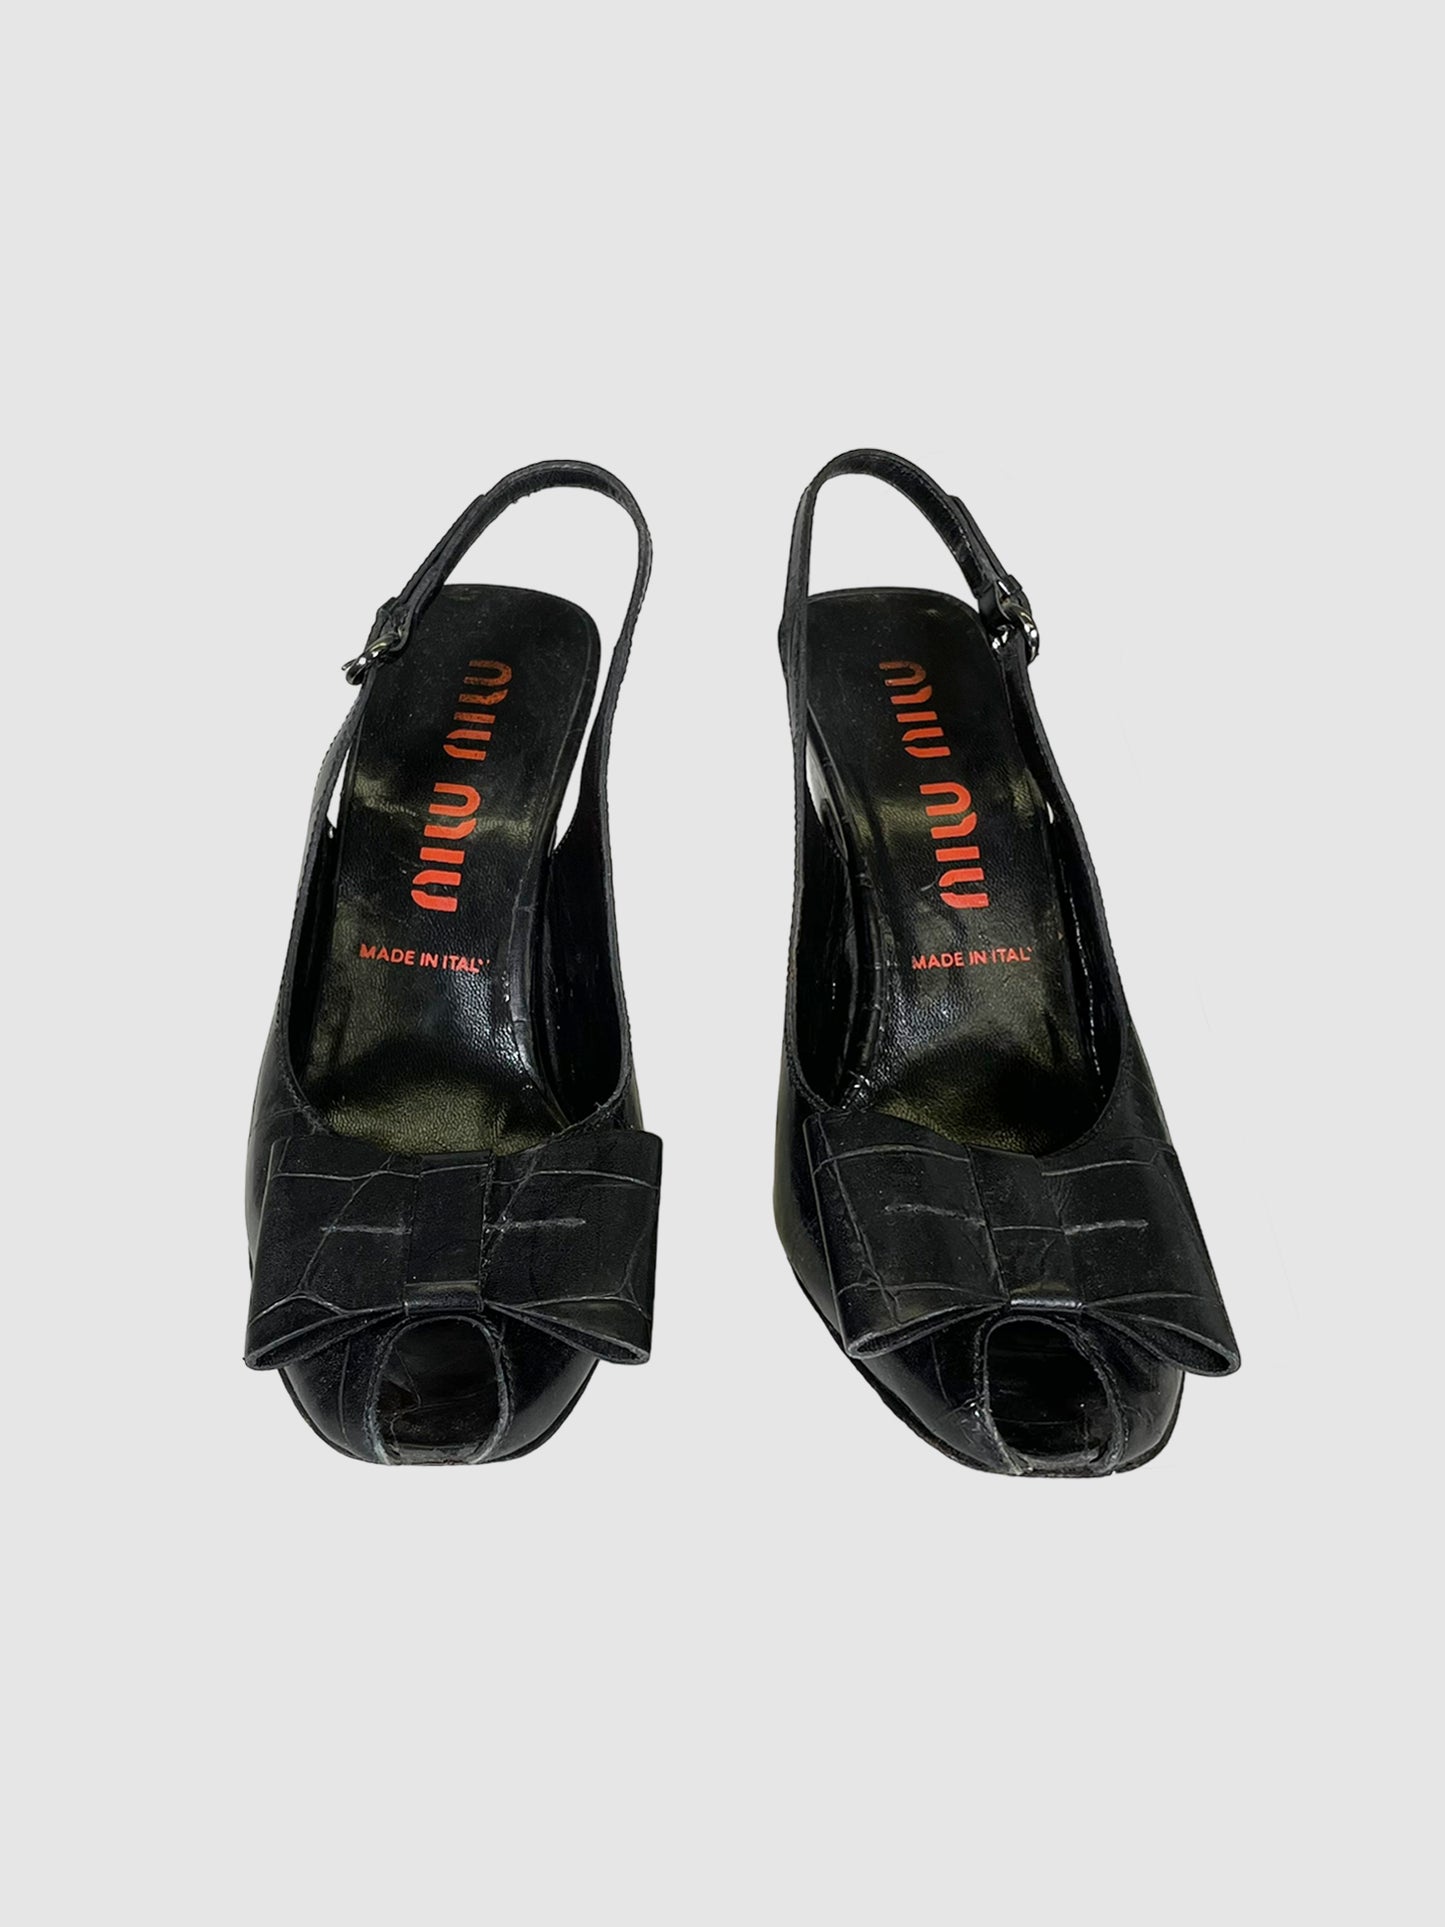 Miu Miu Leather Bow Accent Slingback Pumps - Size 36.5